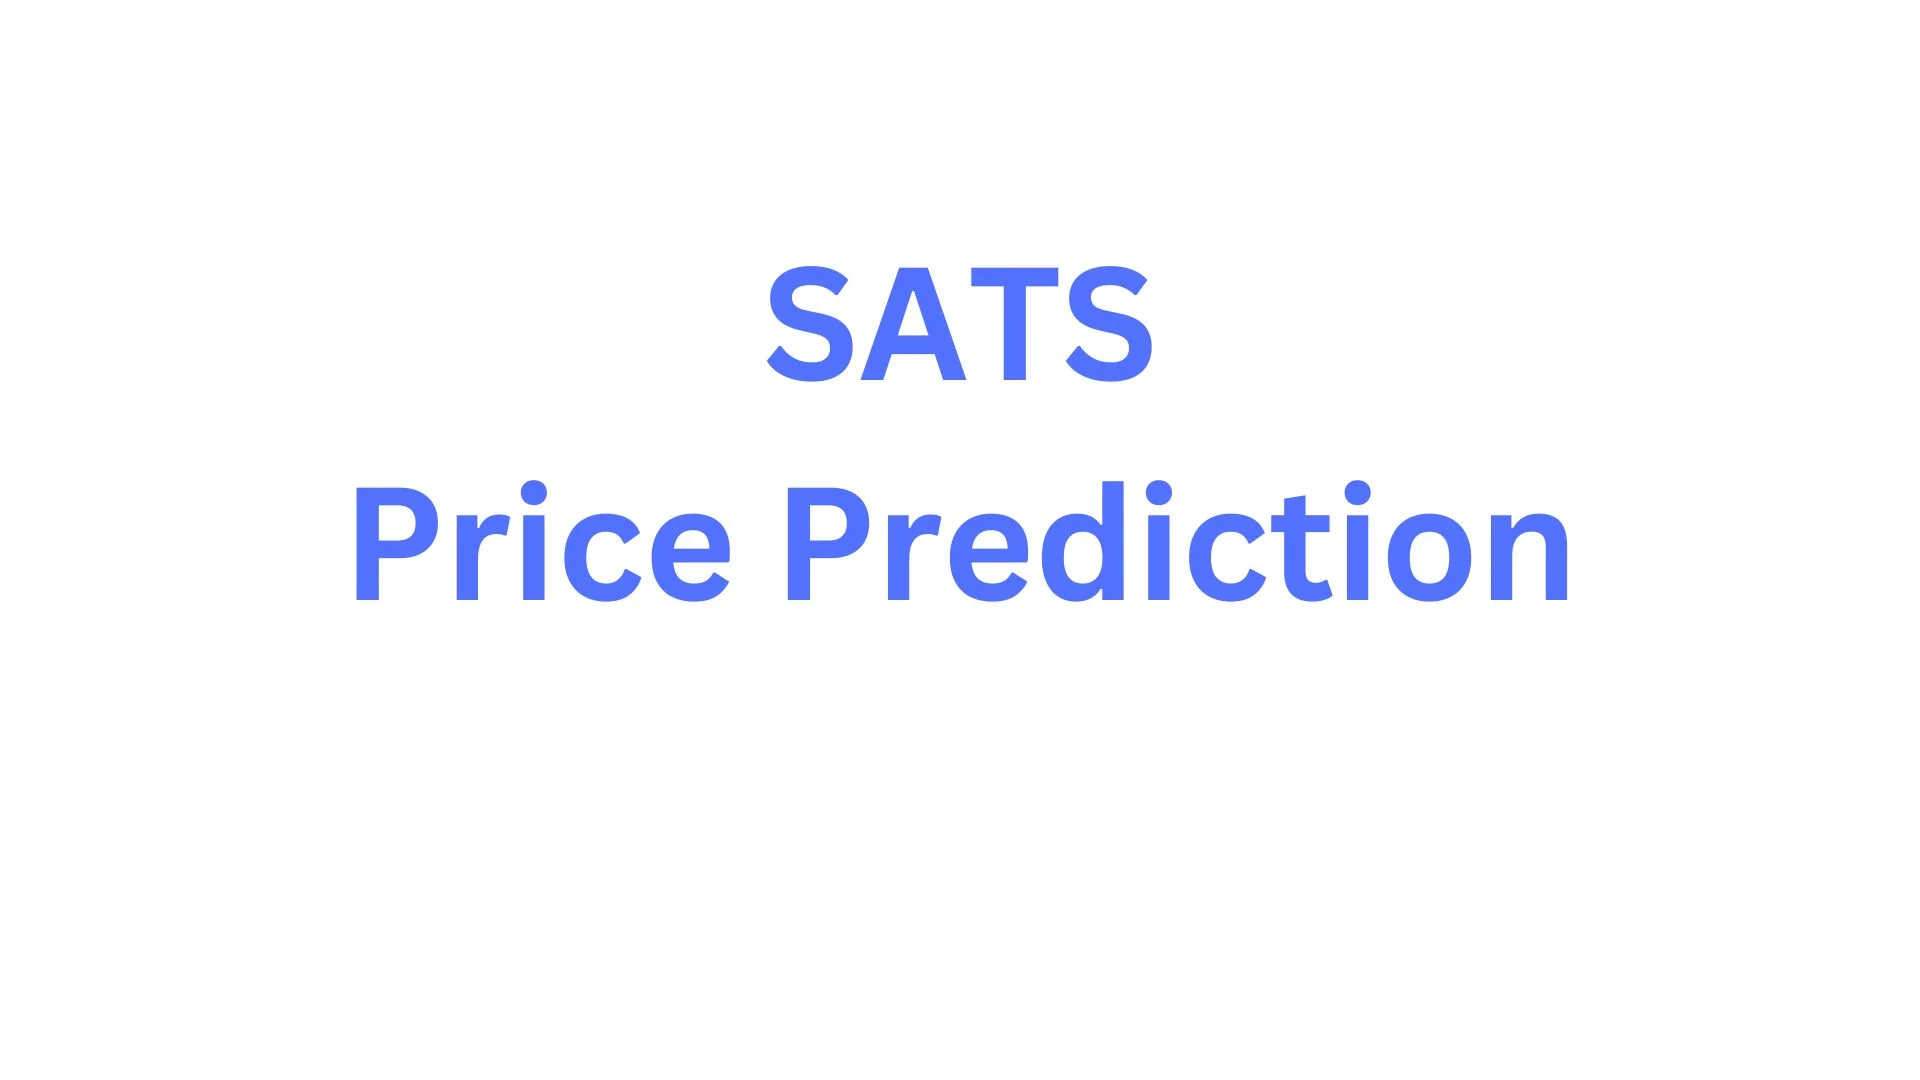 SATS Price Prediction